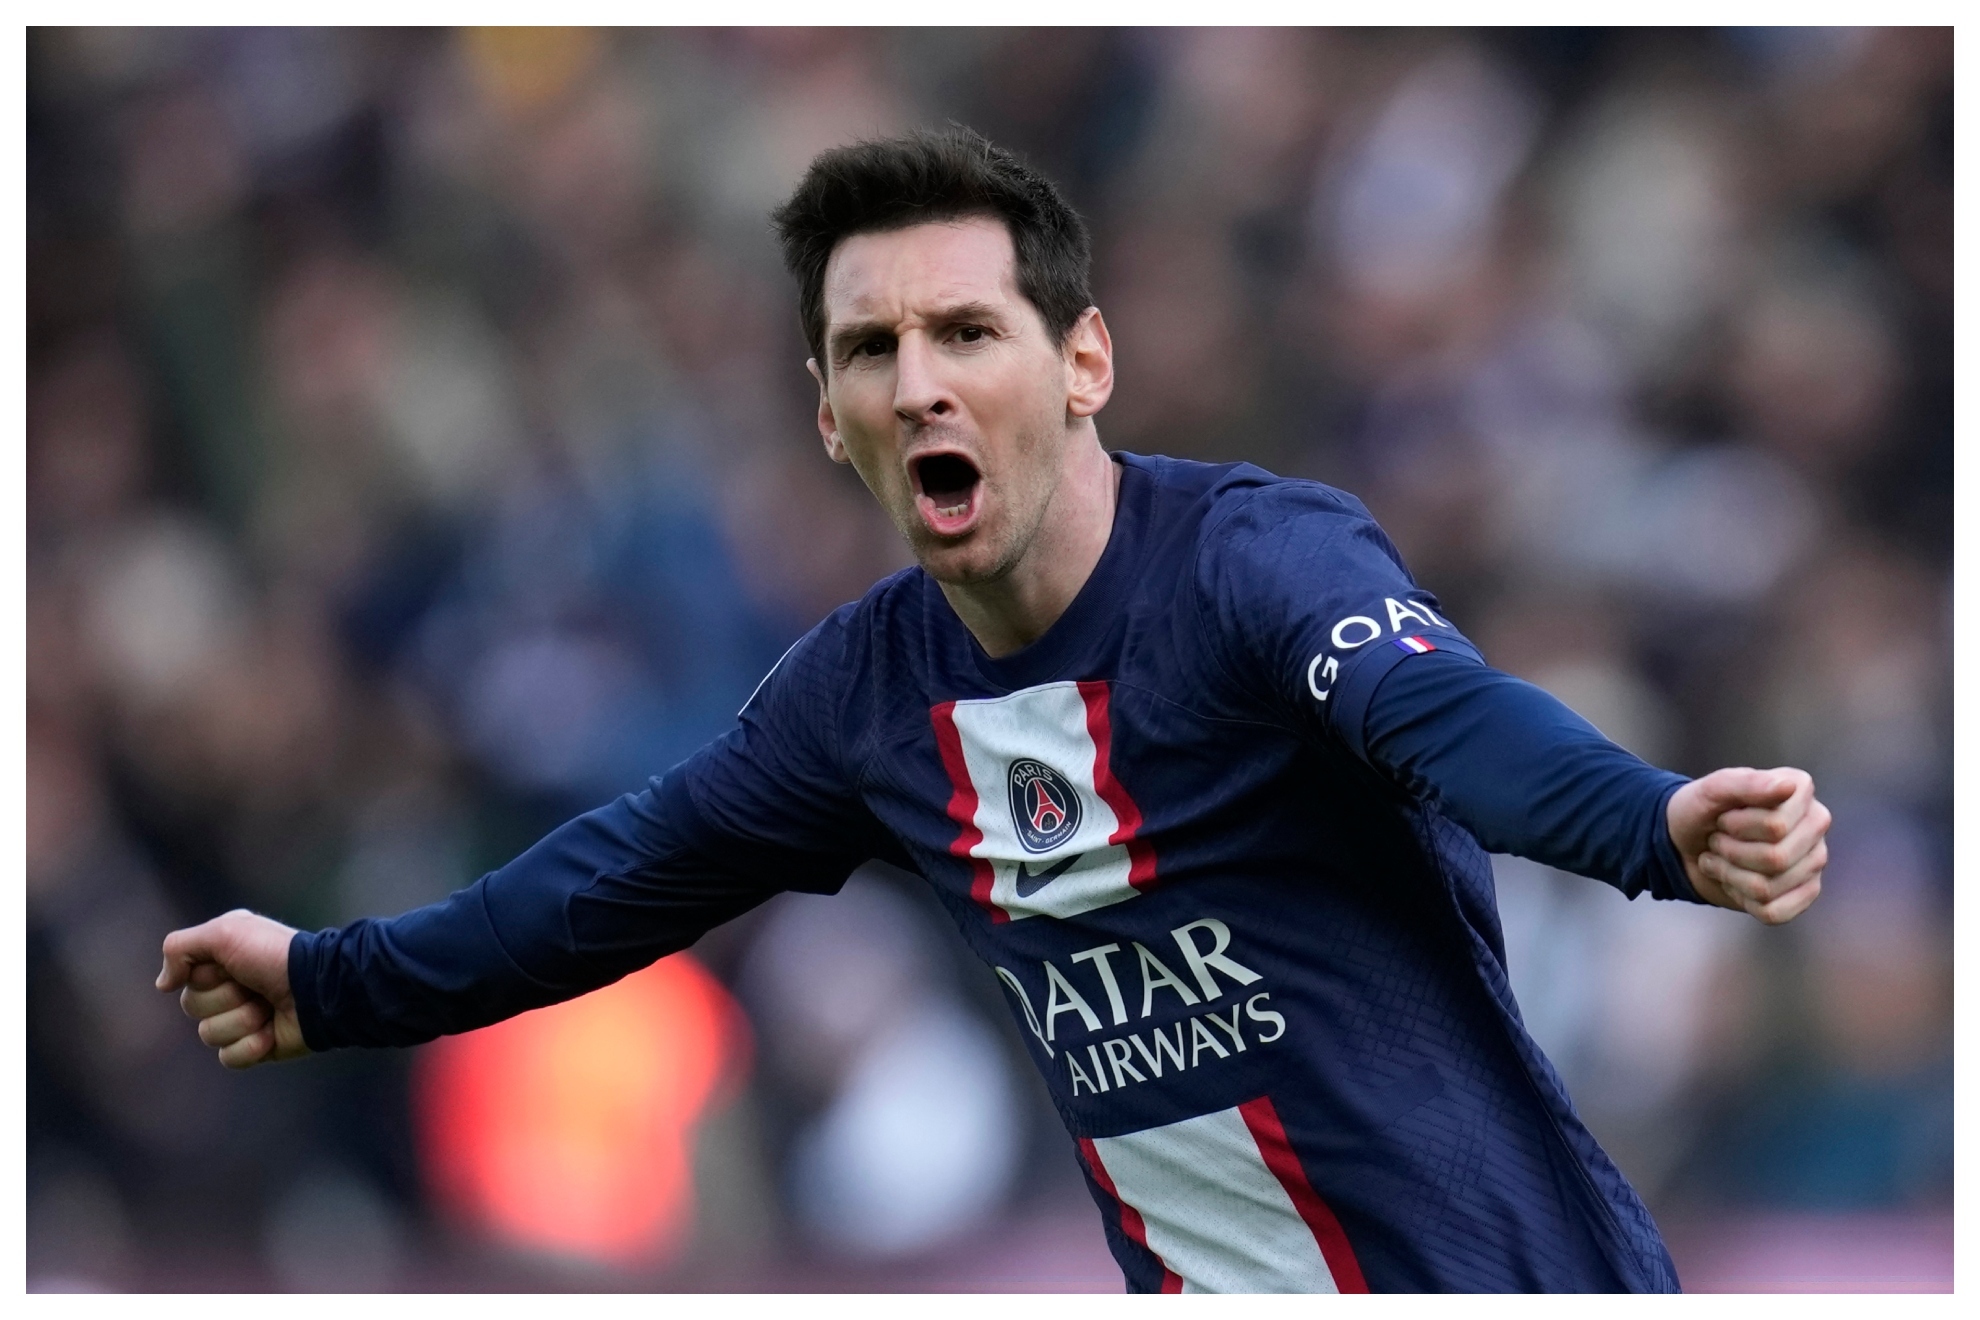 Messi celebrates a goal with PSG